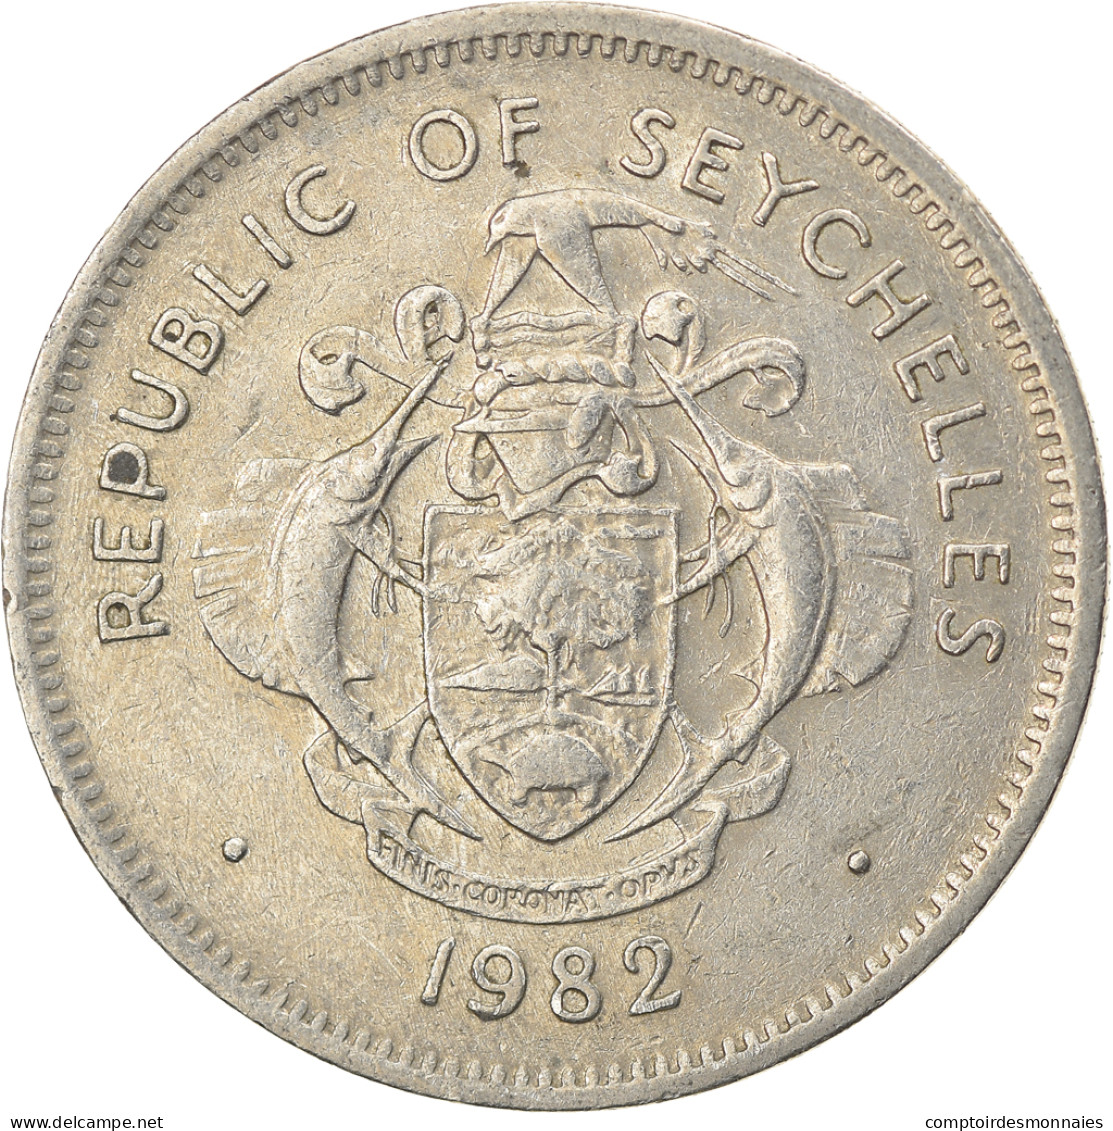 Monnaie, Seychelles, Rupee, 1982, British Royal Mint, TTB, Copper-nickel - Seychellen